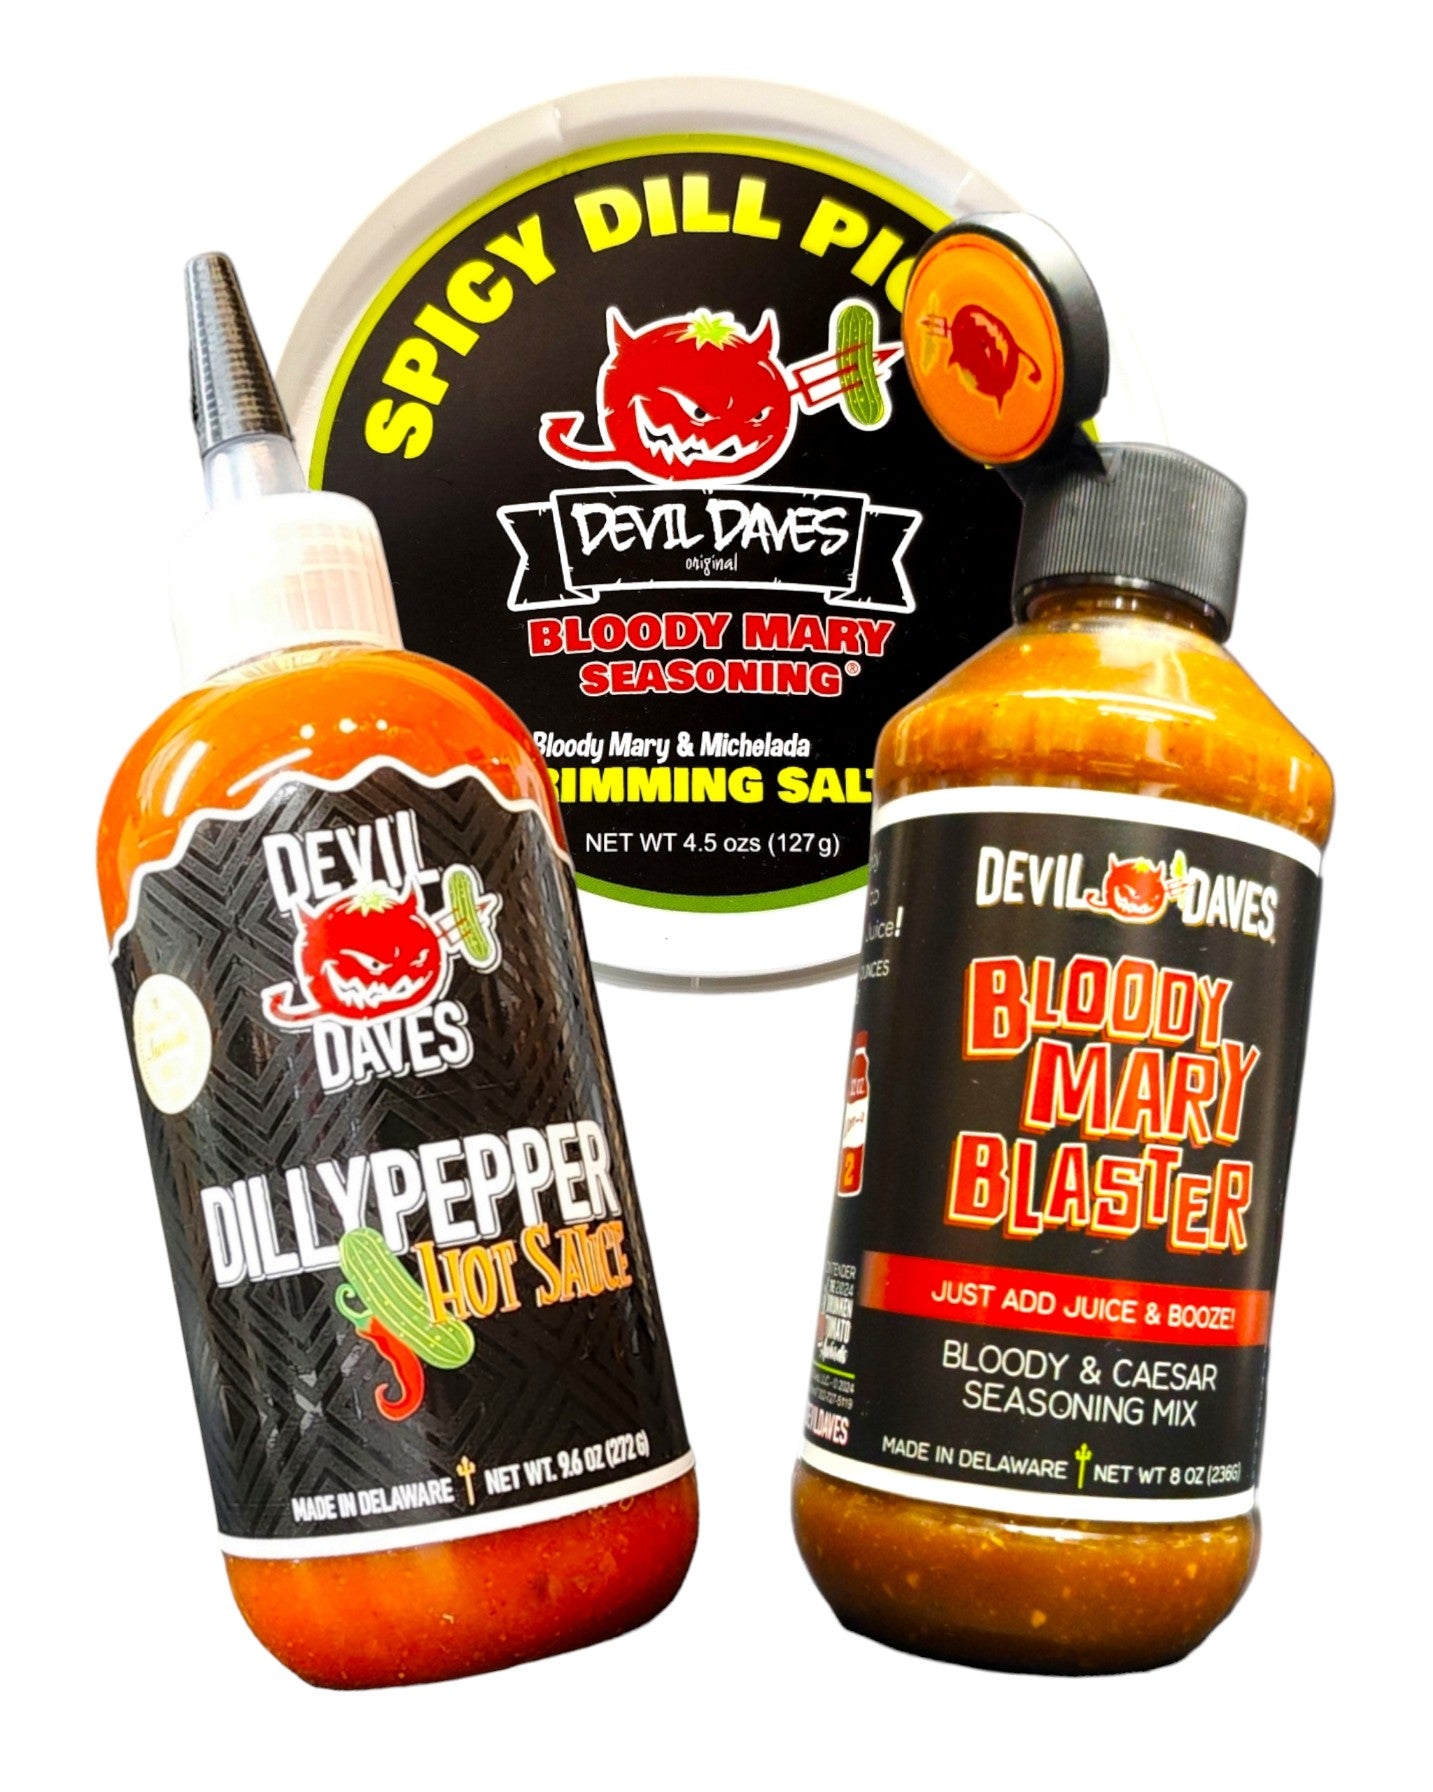 Briny Goodness | Pickle Rimmer, Dilly Pepper & Blaster Seasoning